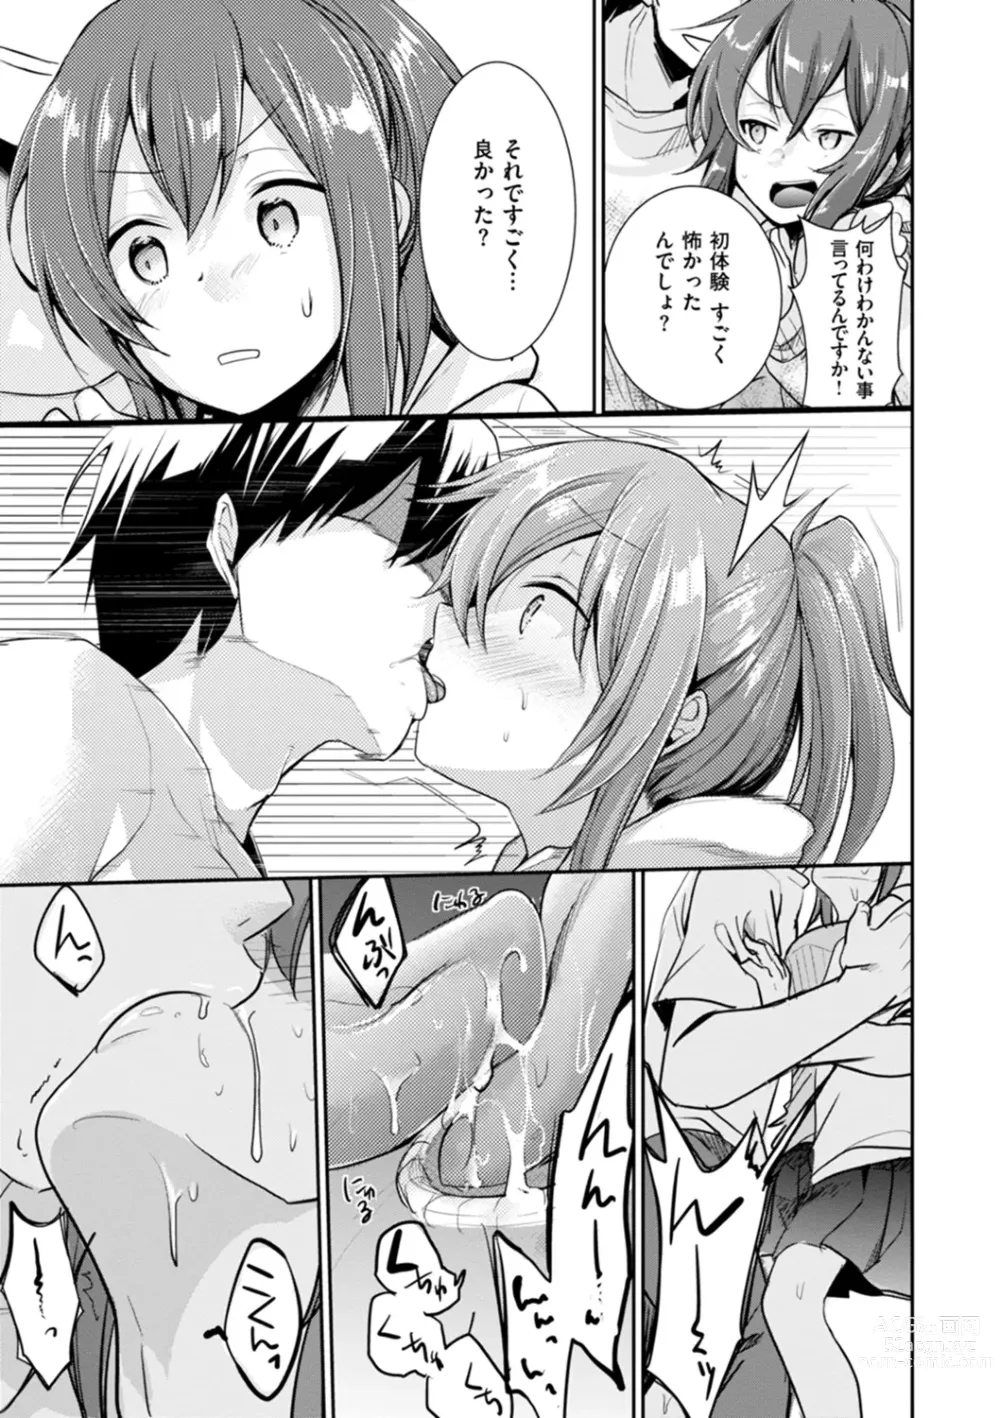 Page 9 of manga Kanojo no Jijou - Her Circumstances